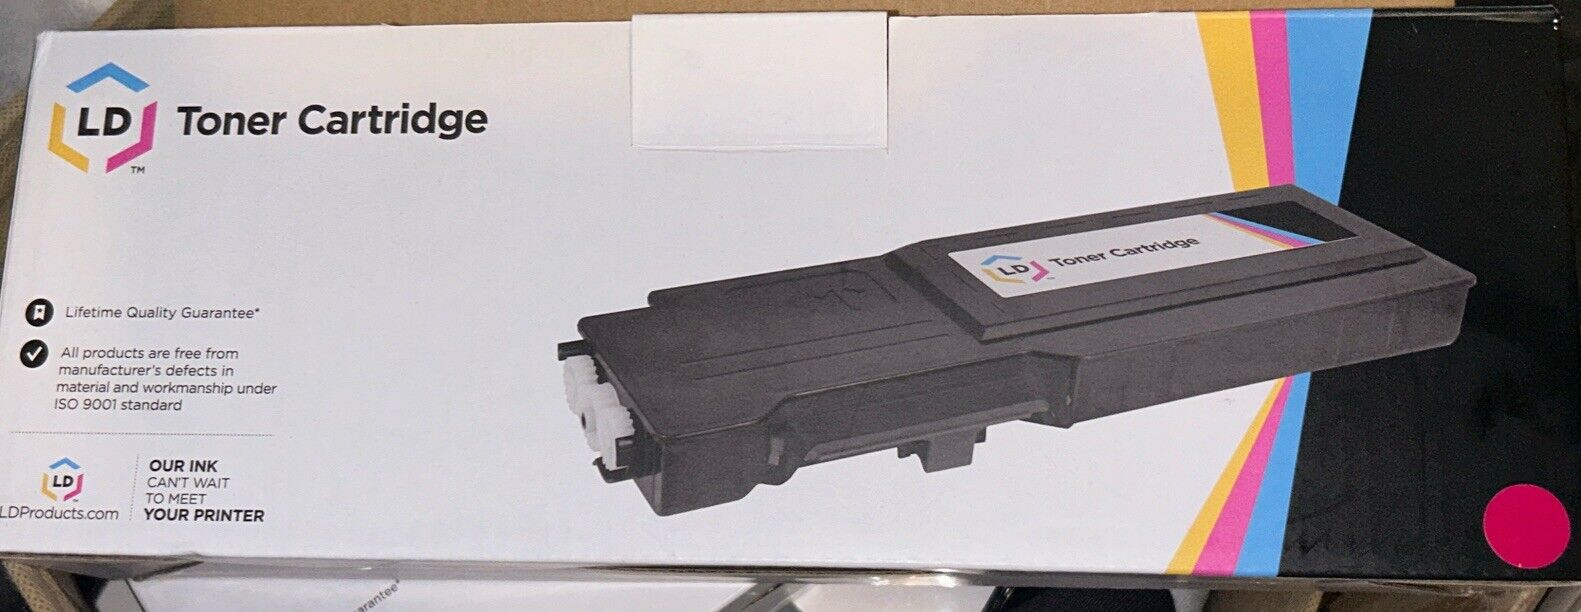 LD 331-8431 Magenta Laser Toner Cartridge for Dell Printer